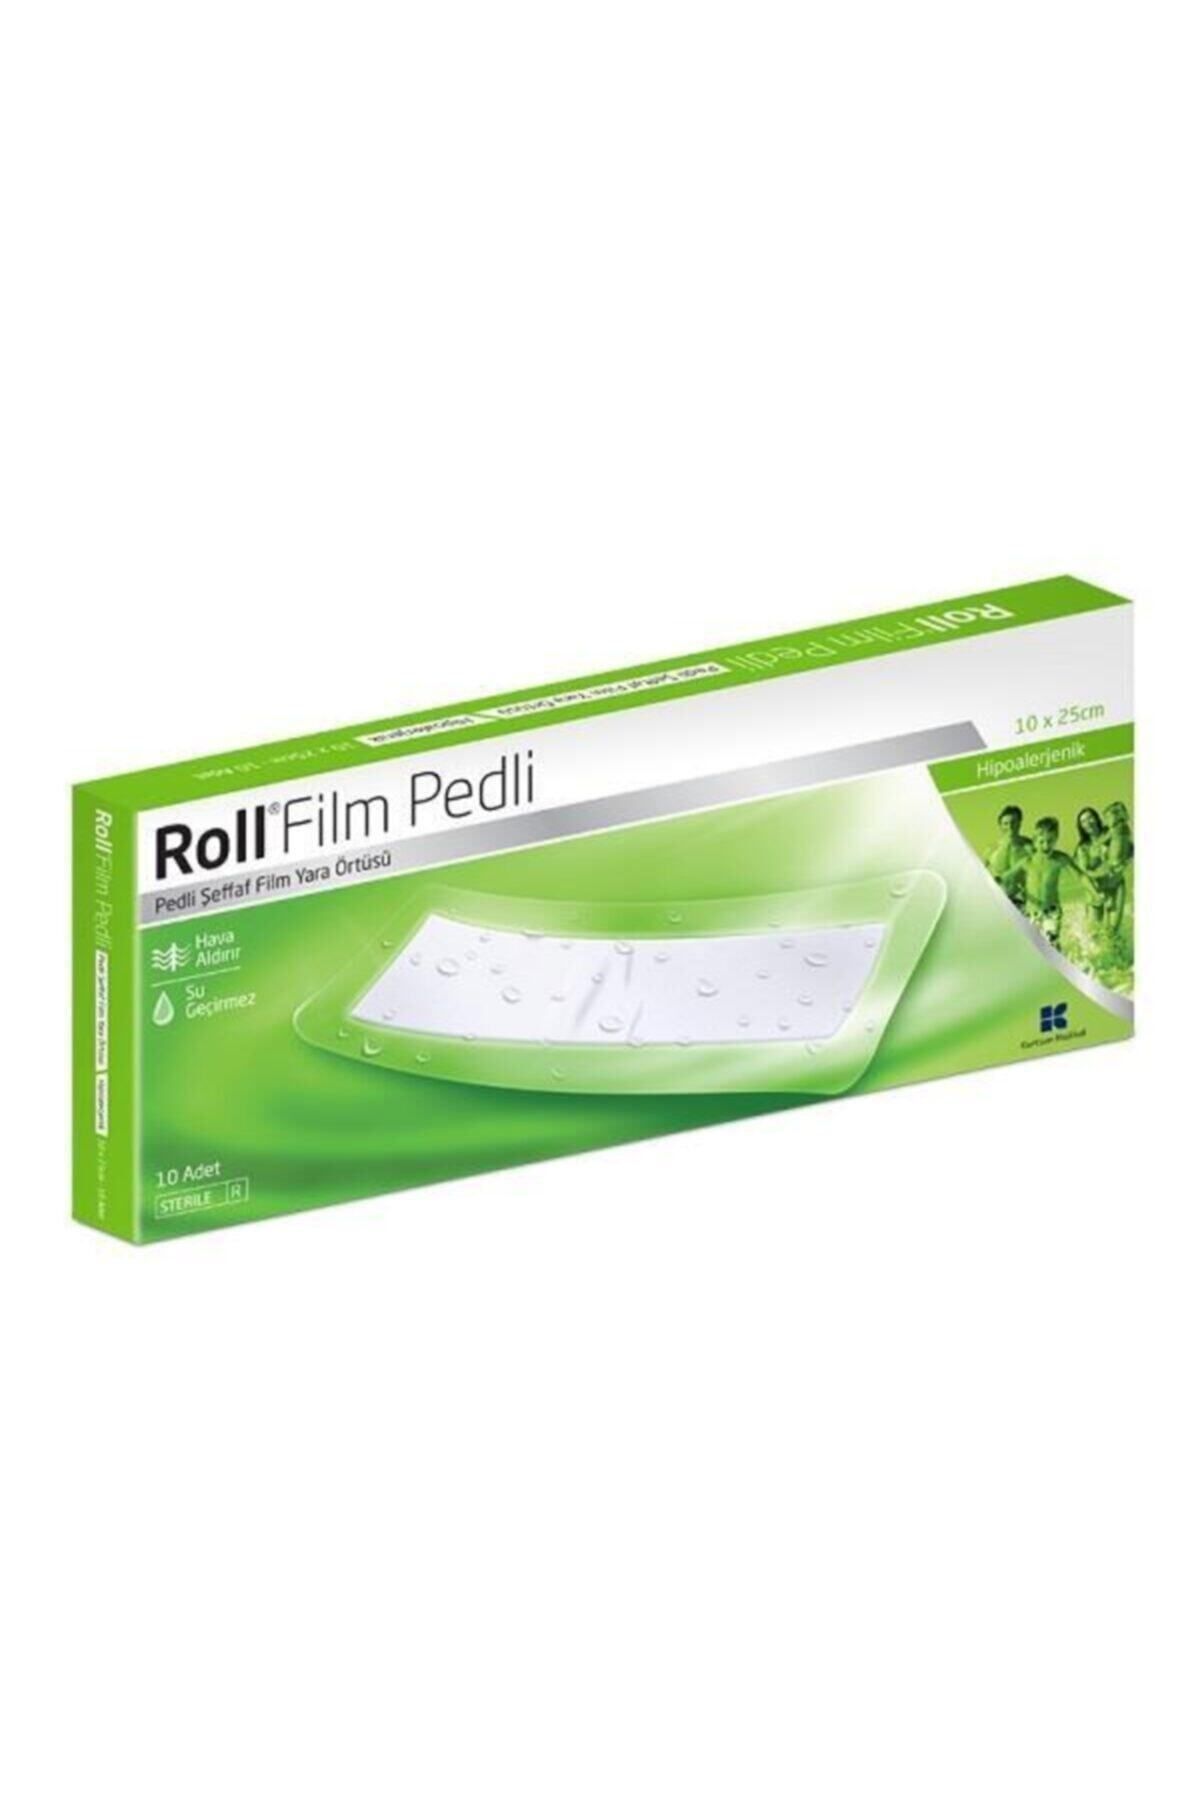 Roll Film Pedli 10x25 Cm Steril Yara Örtüsü 1 Adet Su Geçirmez (KUTU İÇERİSİNDEN 1 ADET)